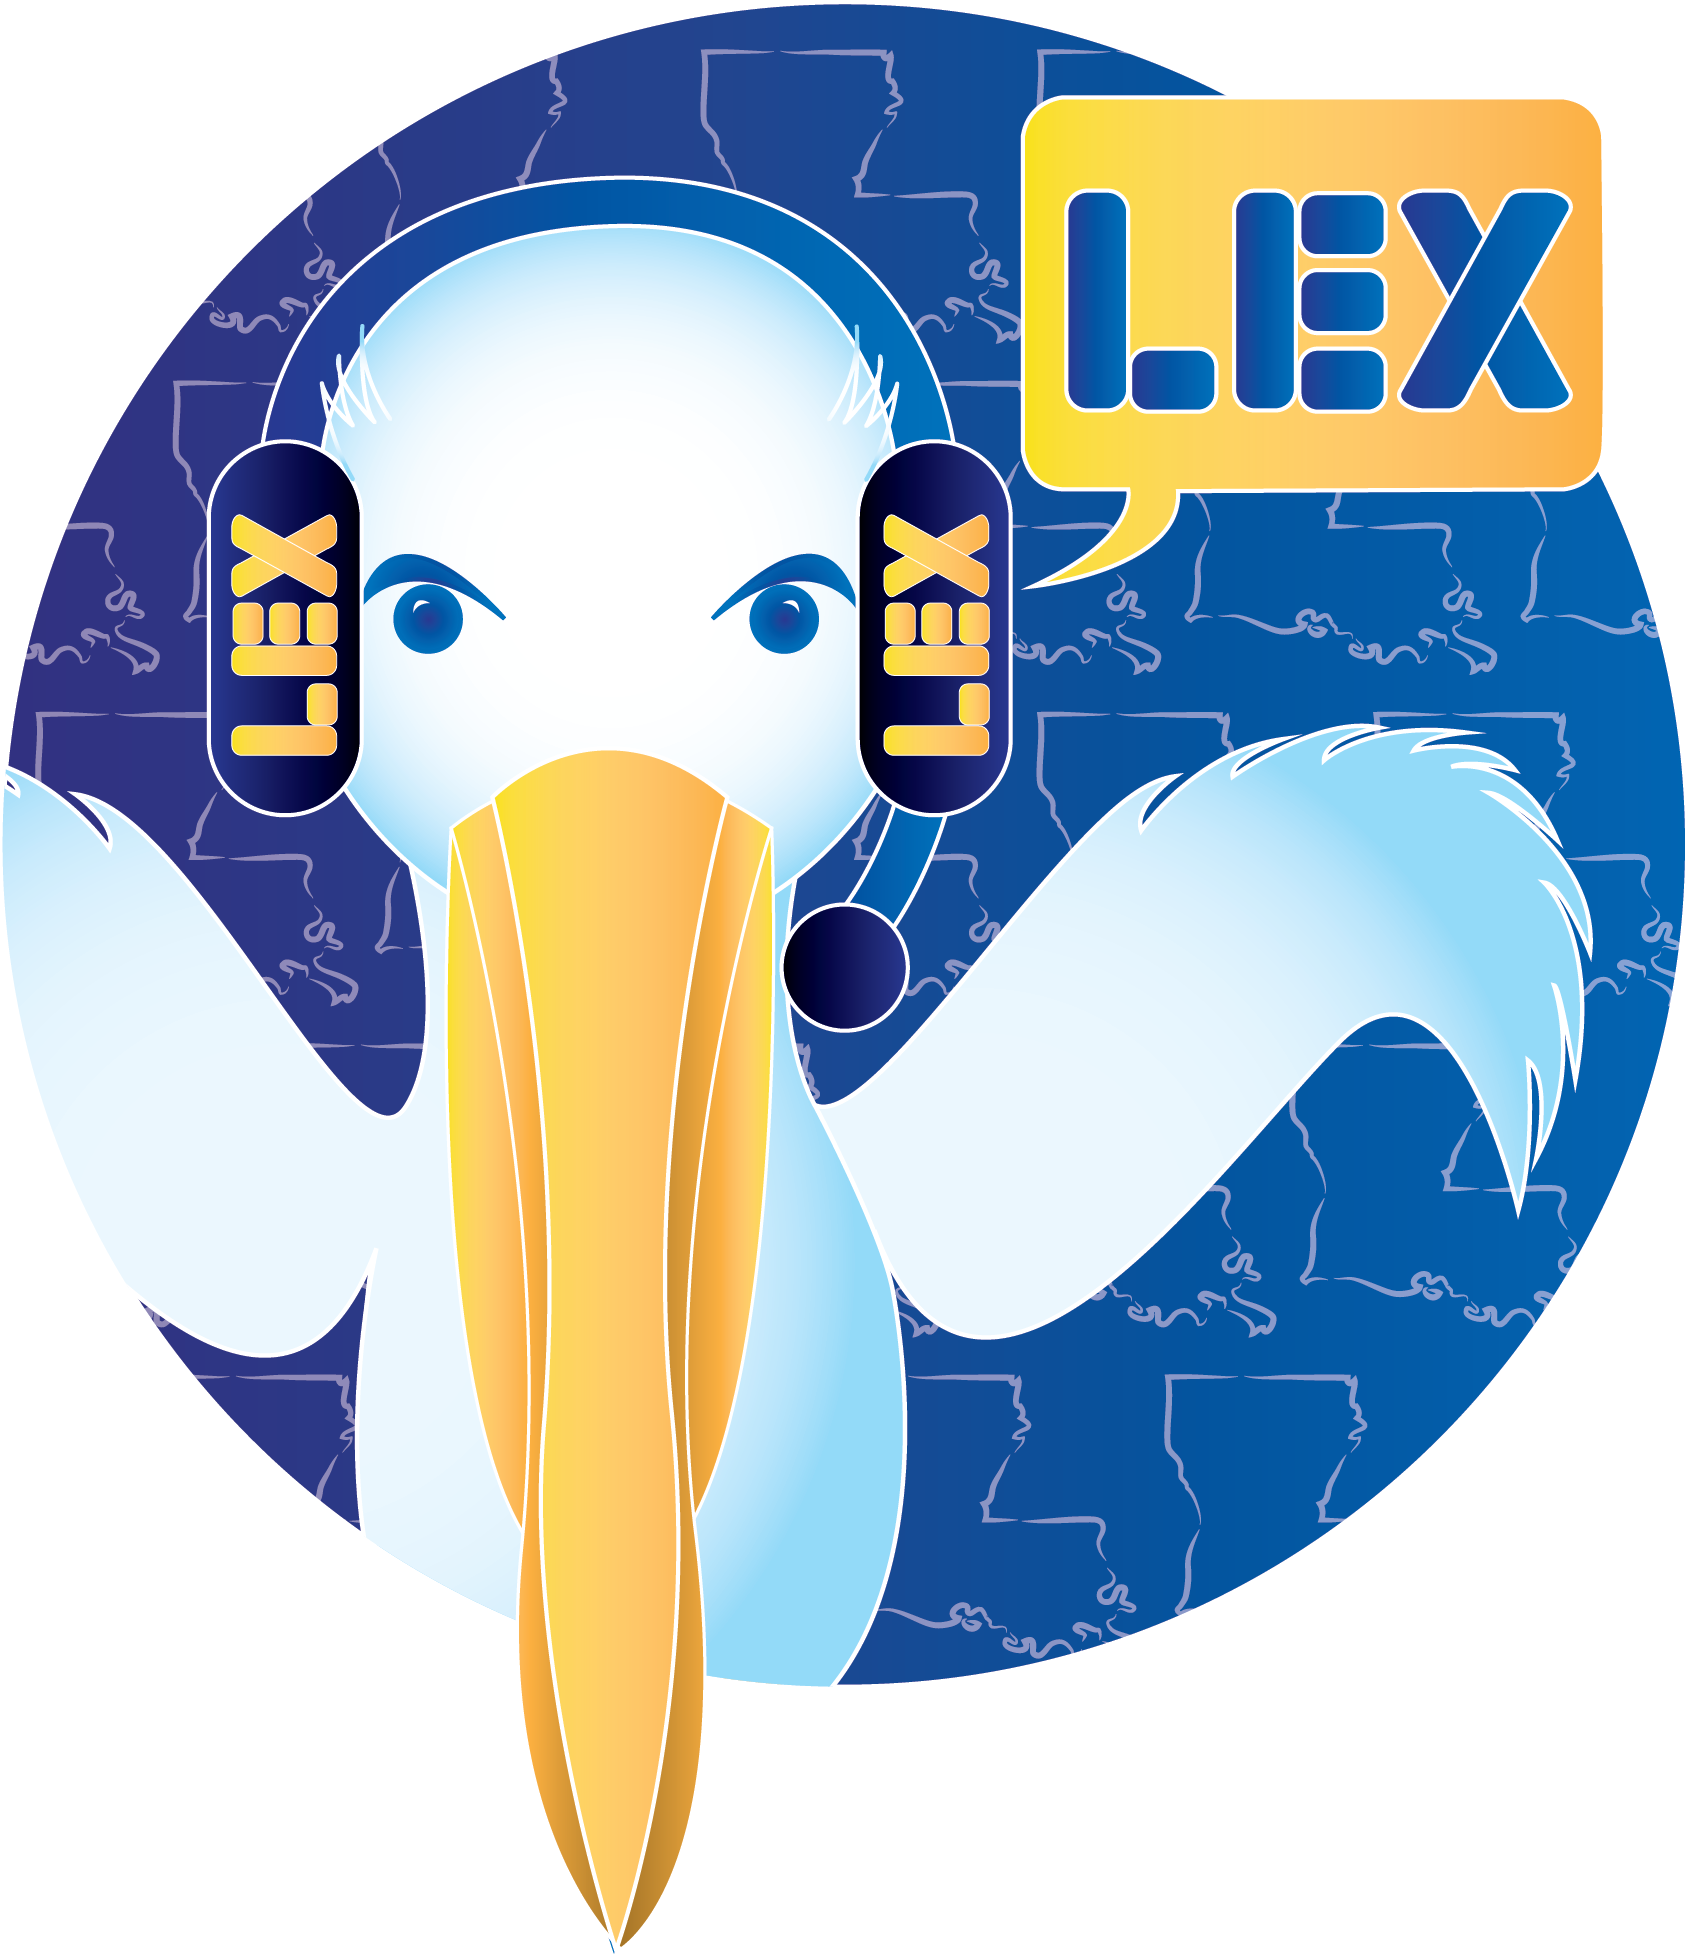 LOSFA's LEX Logo